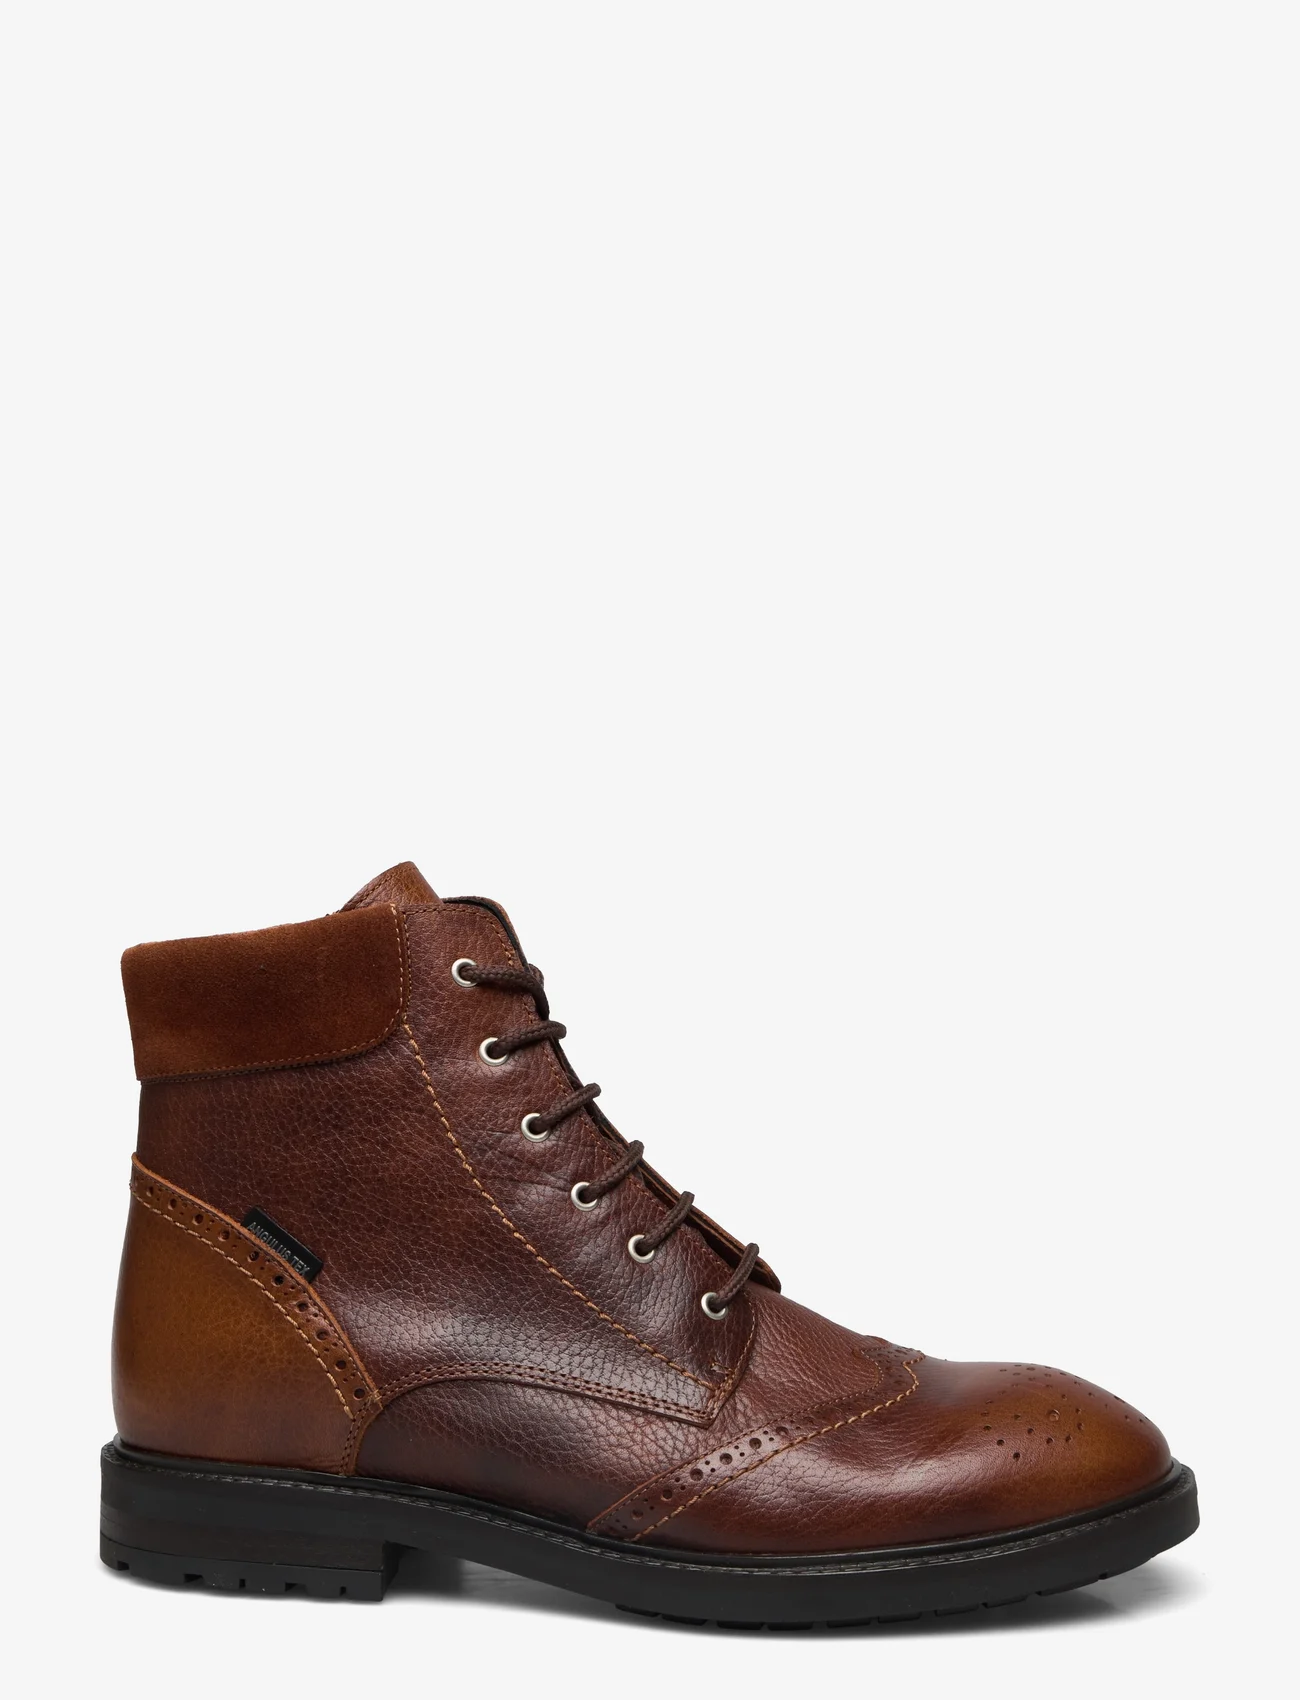 ANGULUS - Shoes - flat - with lace - veter schoenen - 2509/1166 medium brown/cognac - 1